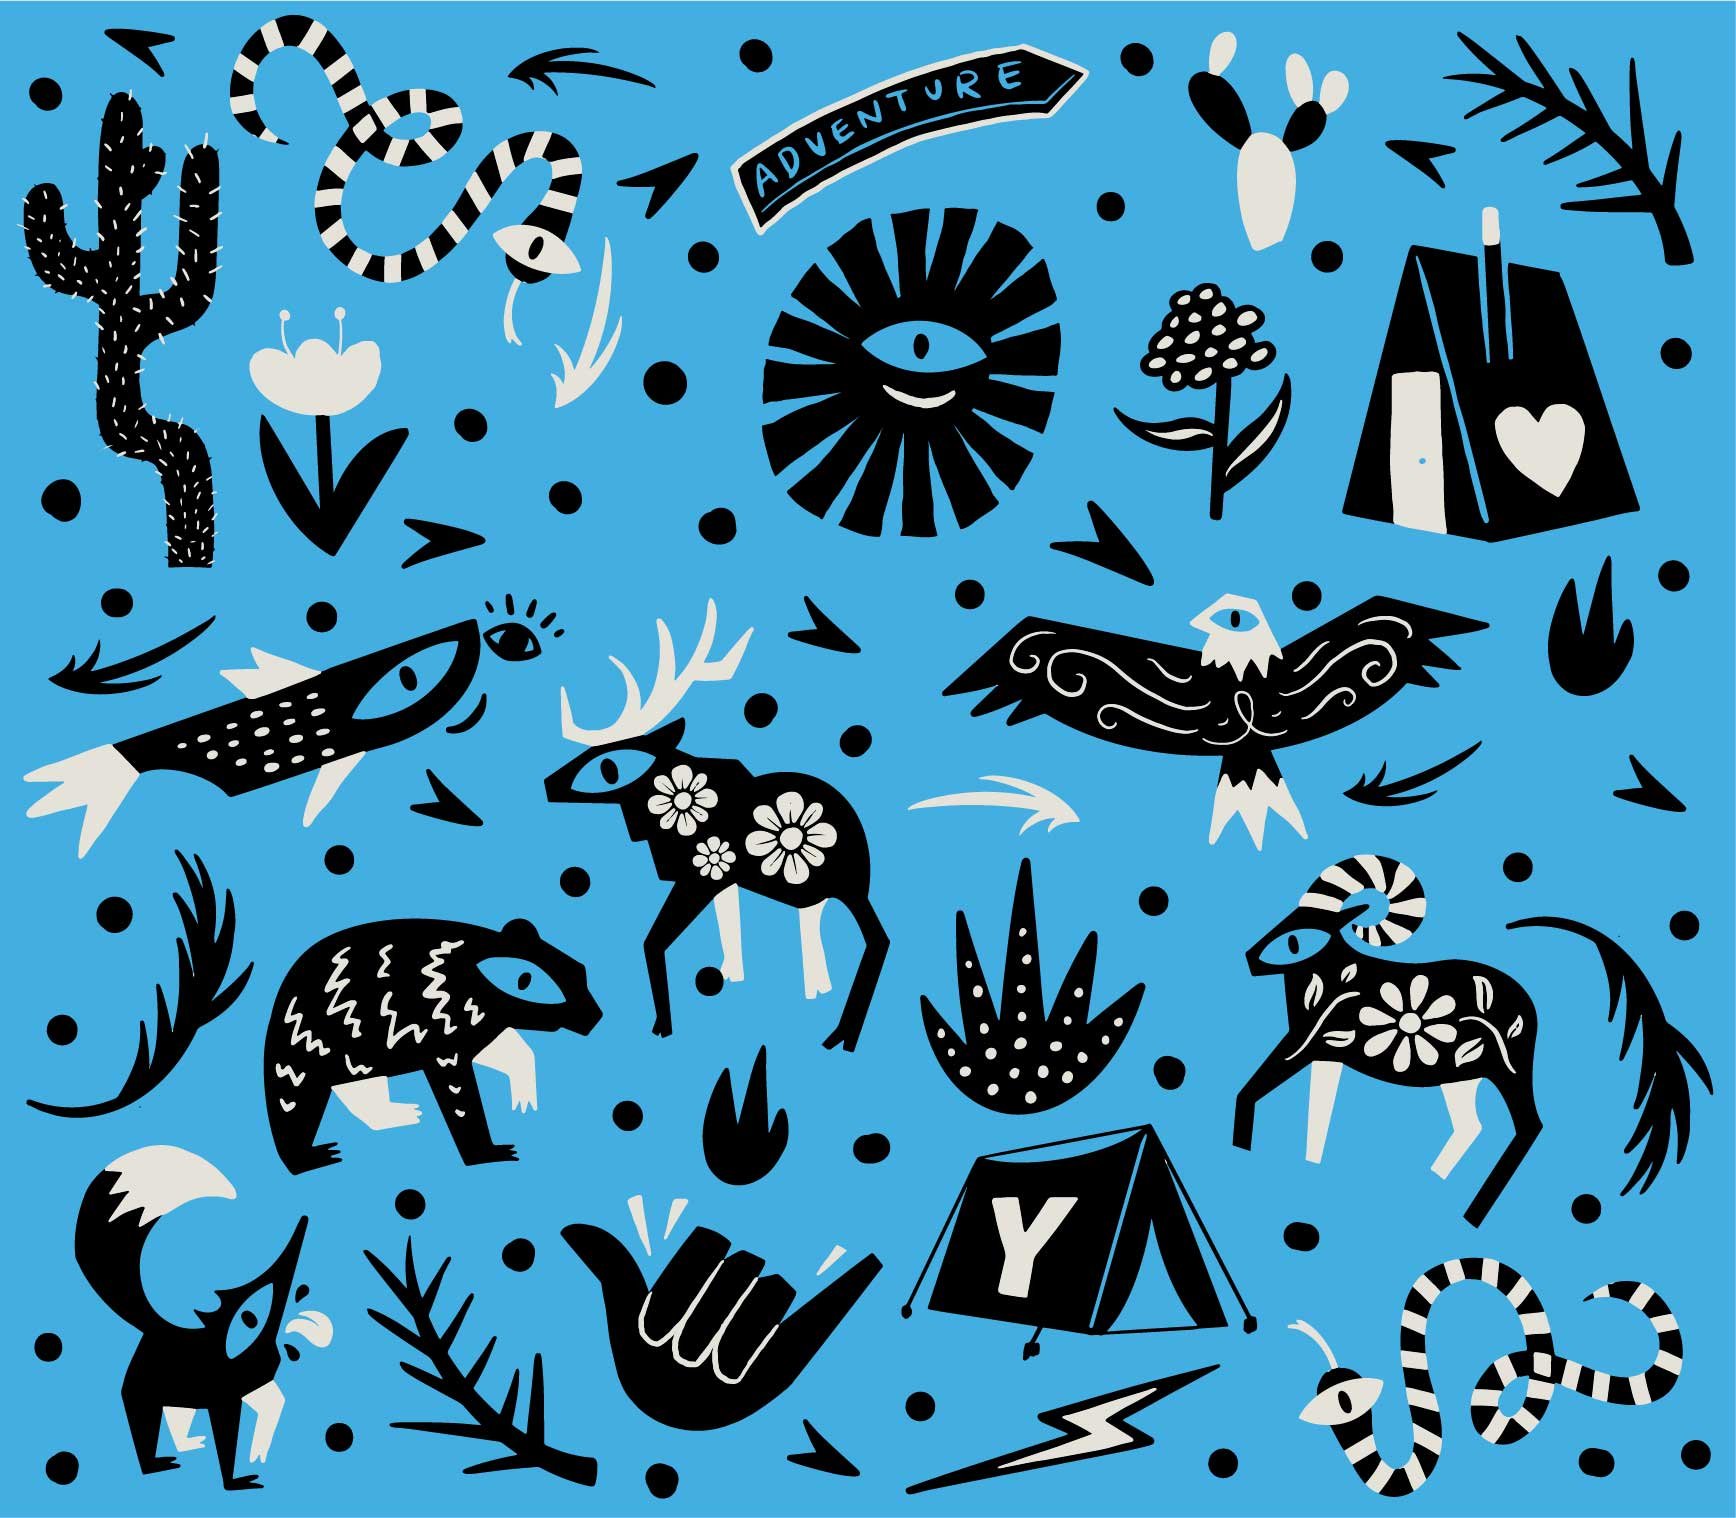 Yeti-artist-series_illustration-pattern-blue.jpg